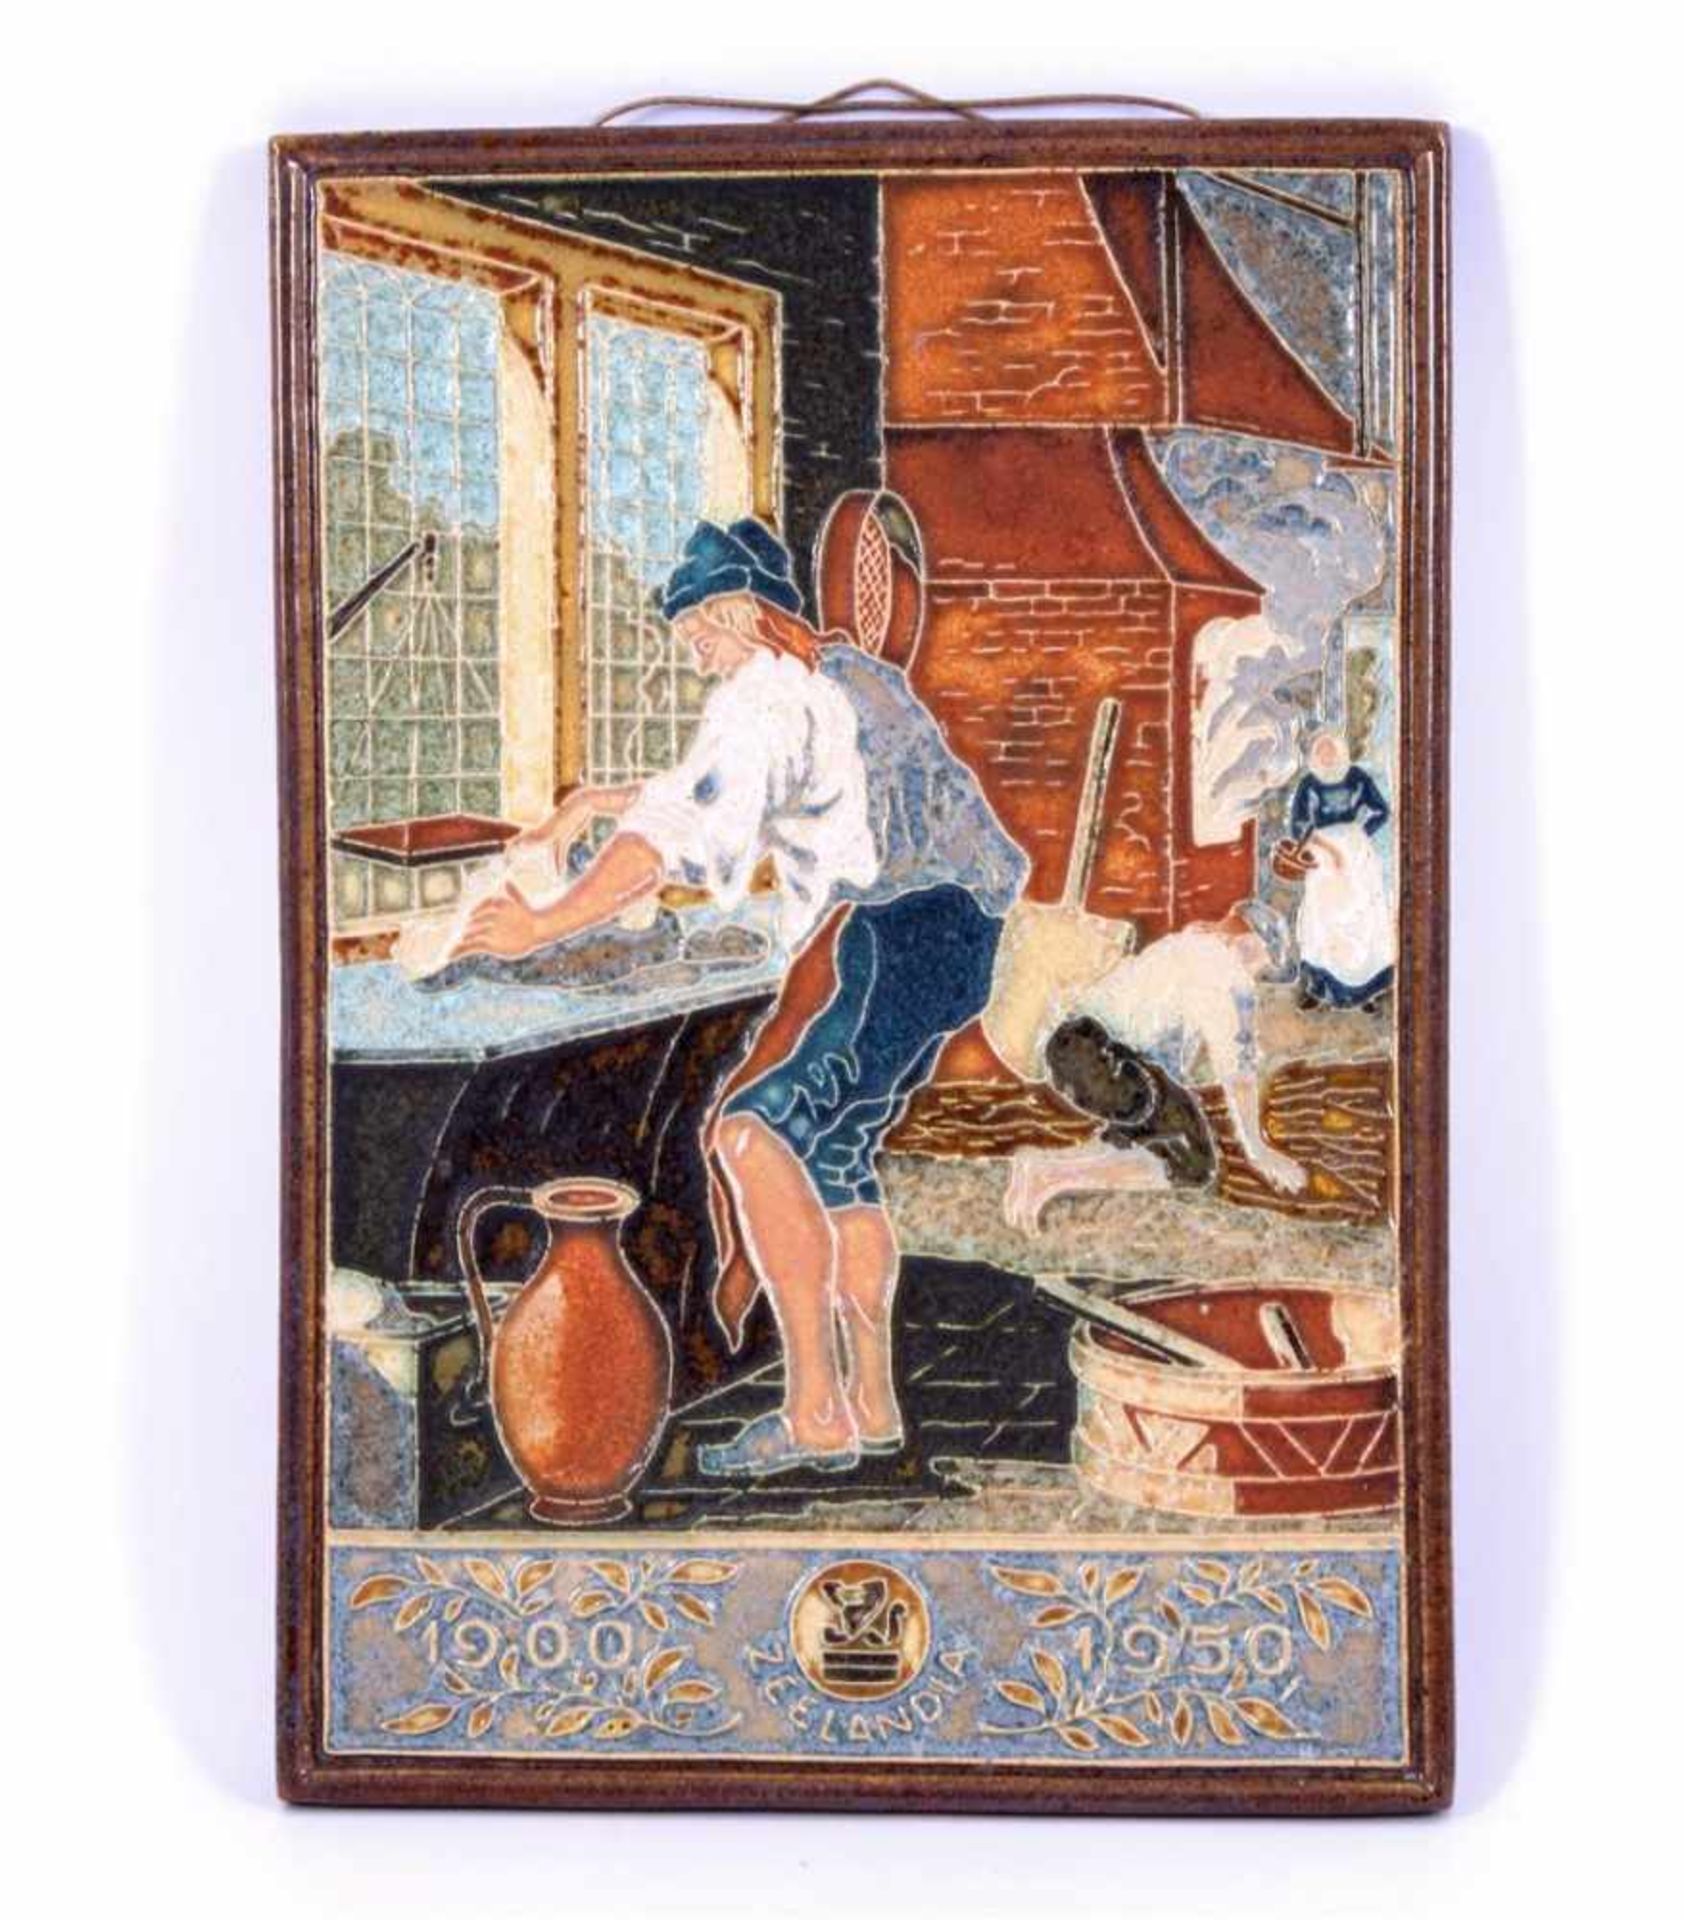 Porceleyne Fles tile 100 years Zeelandia, 29.5x20.5 cm